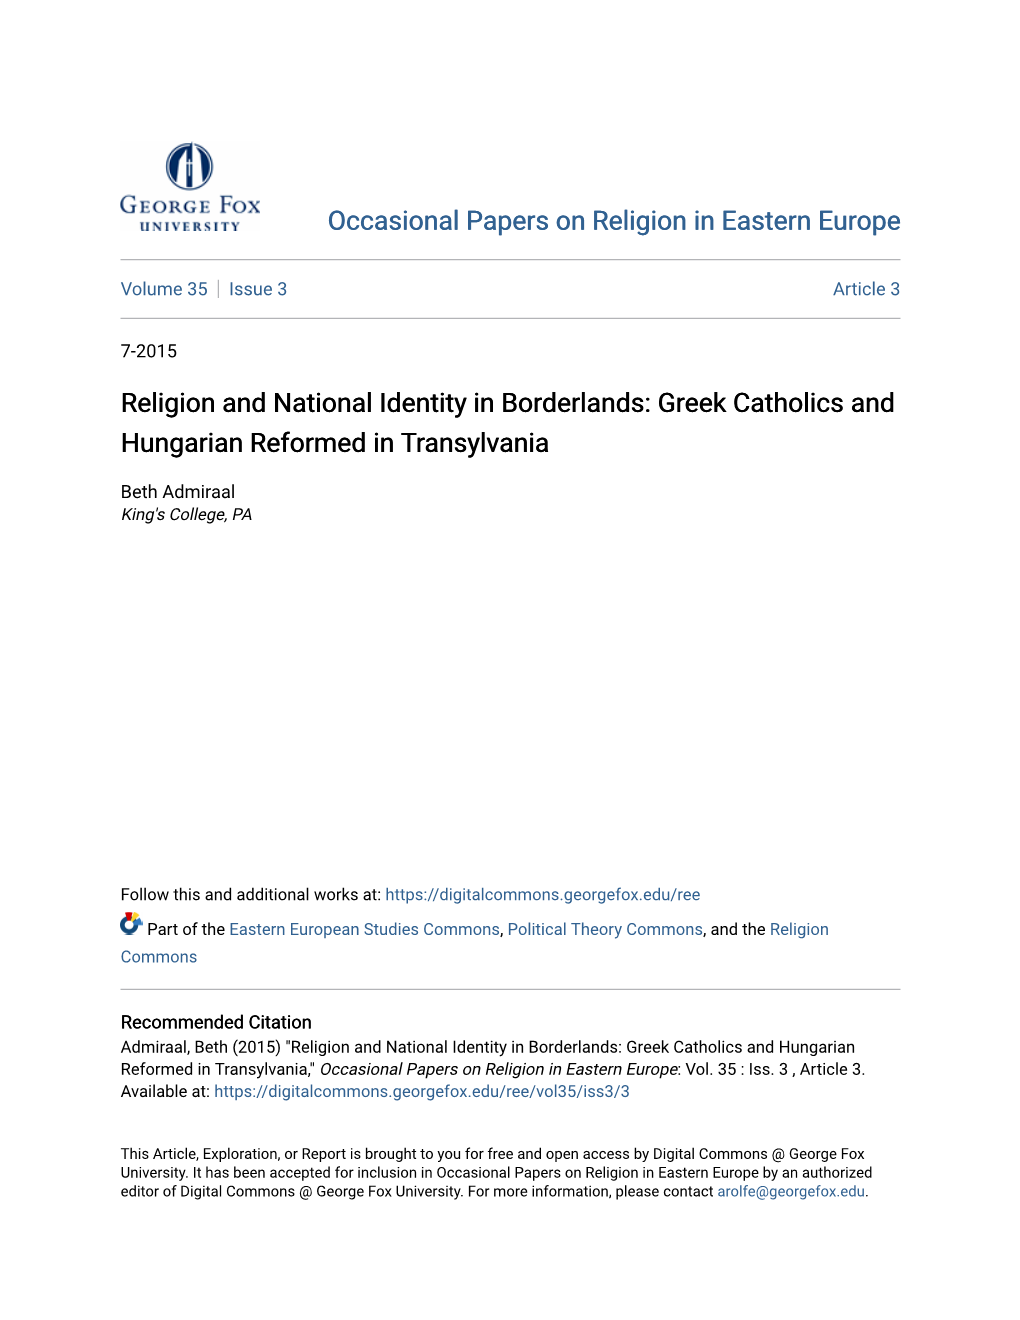 Greek Catholics and Hungarian Reformed in Transylvania